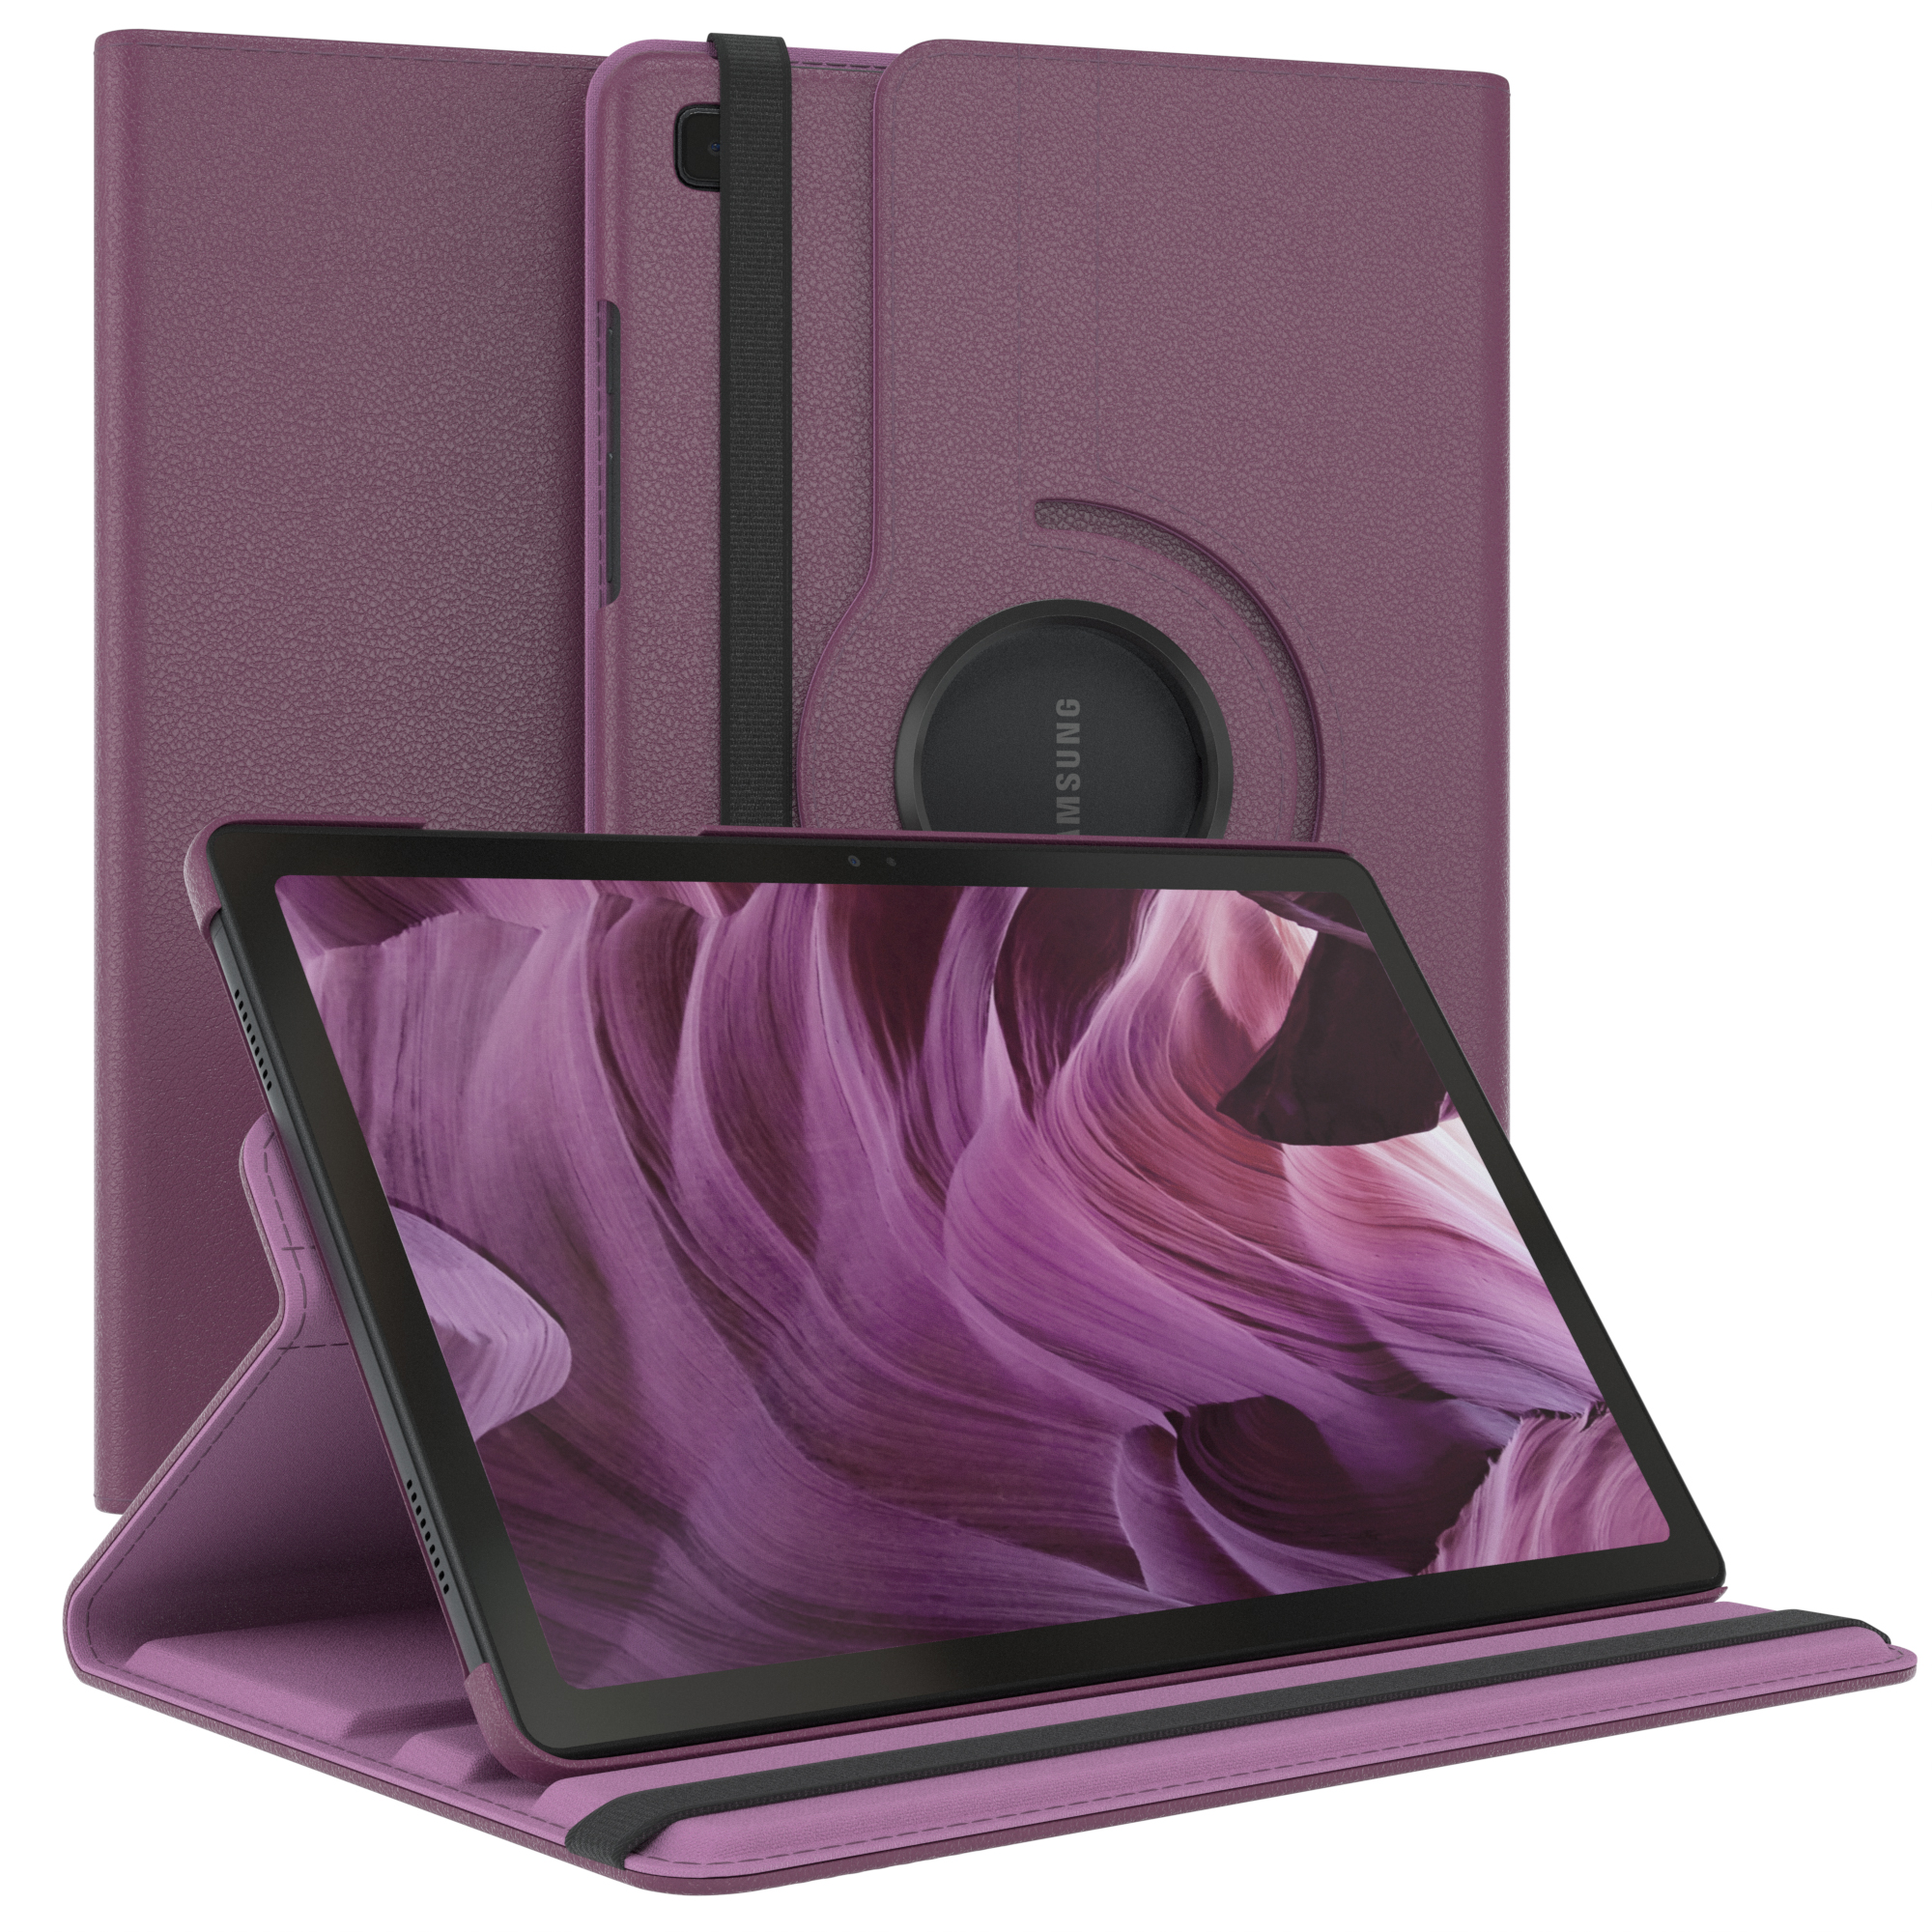 EAZY CASE Schutzhülle Rotationcase Galaxy Bookcover Tab Kunstleder, Samsung A7 Tablethülle für 10.4\